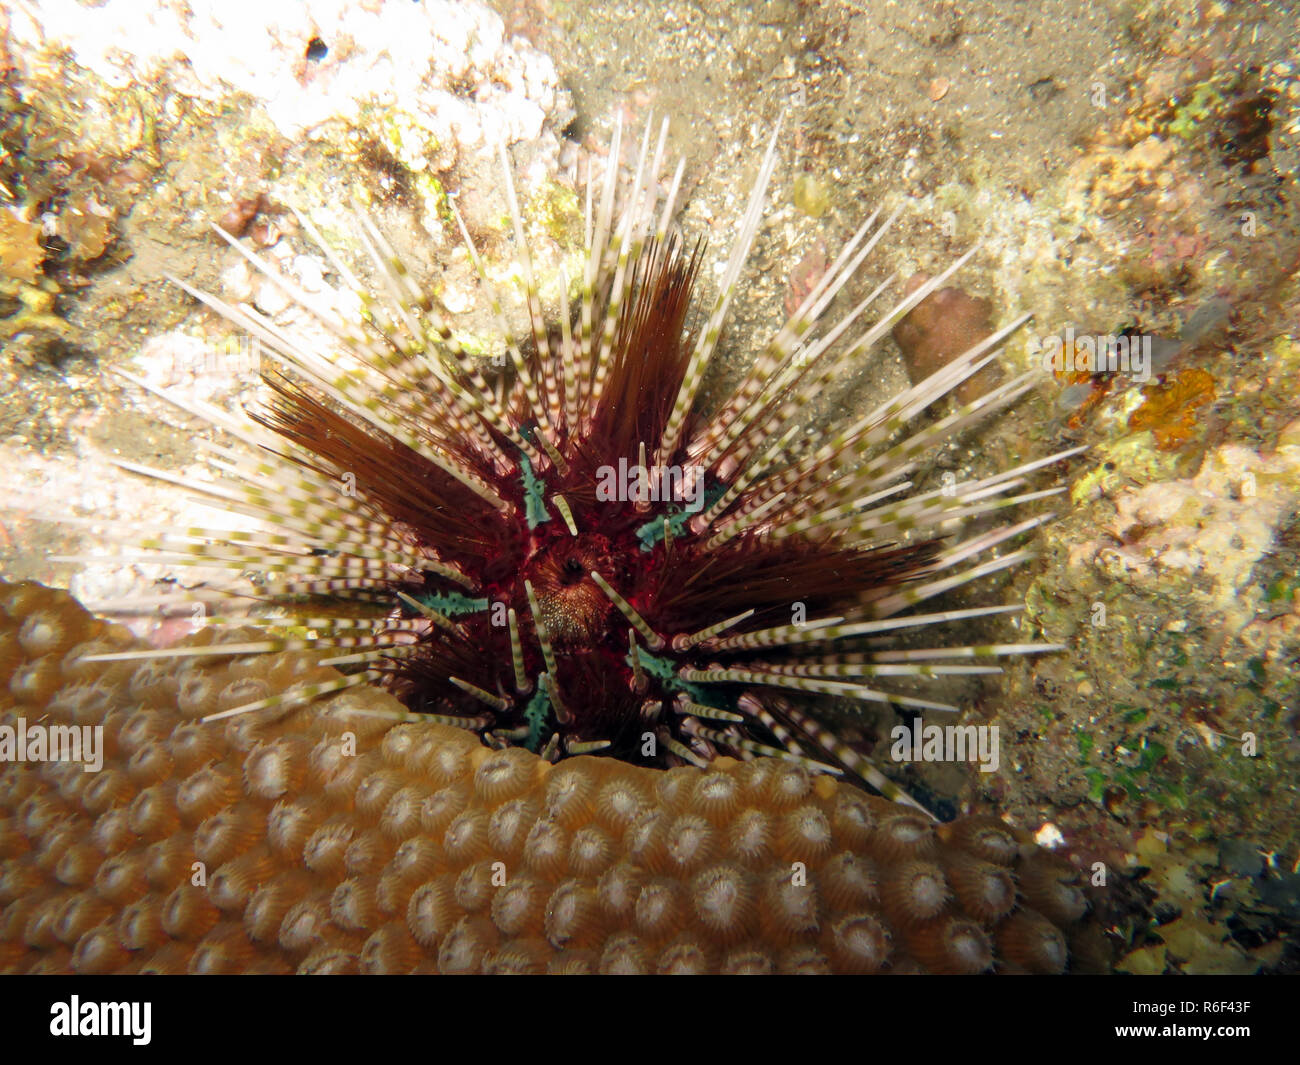 Matita tiara ricci di mare echinothrix calamaris Foto Stock